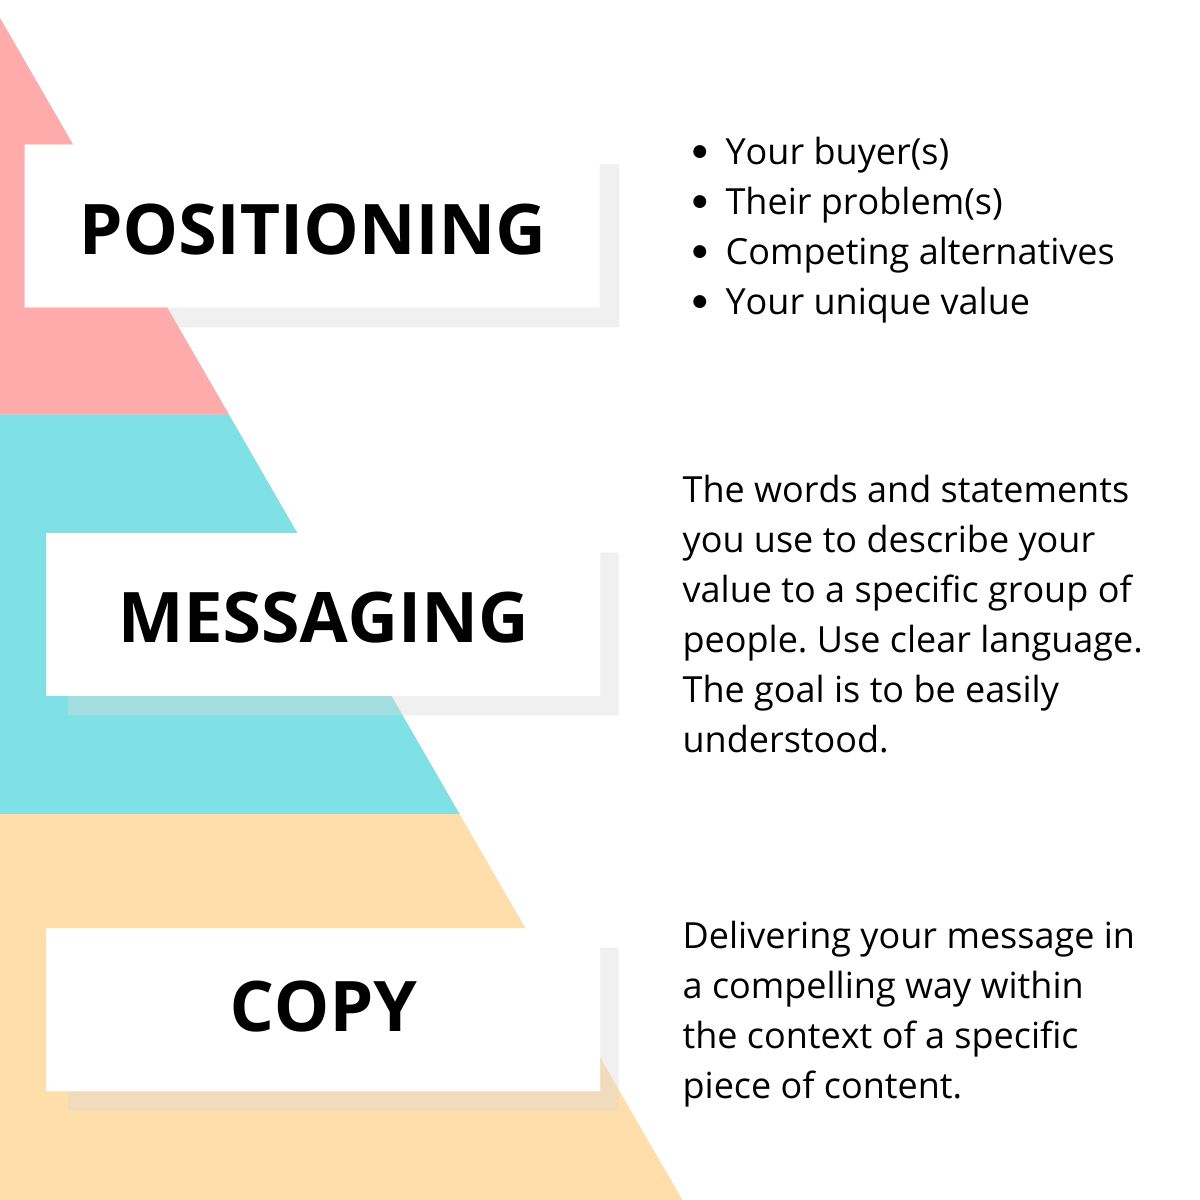 Jason Oakley on LinkedIn: #positioning #messaging #copy | 77 comments